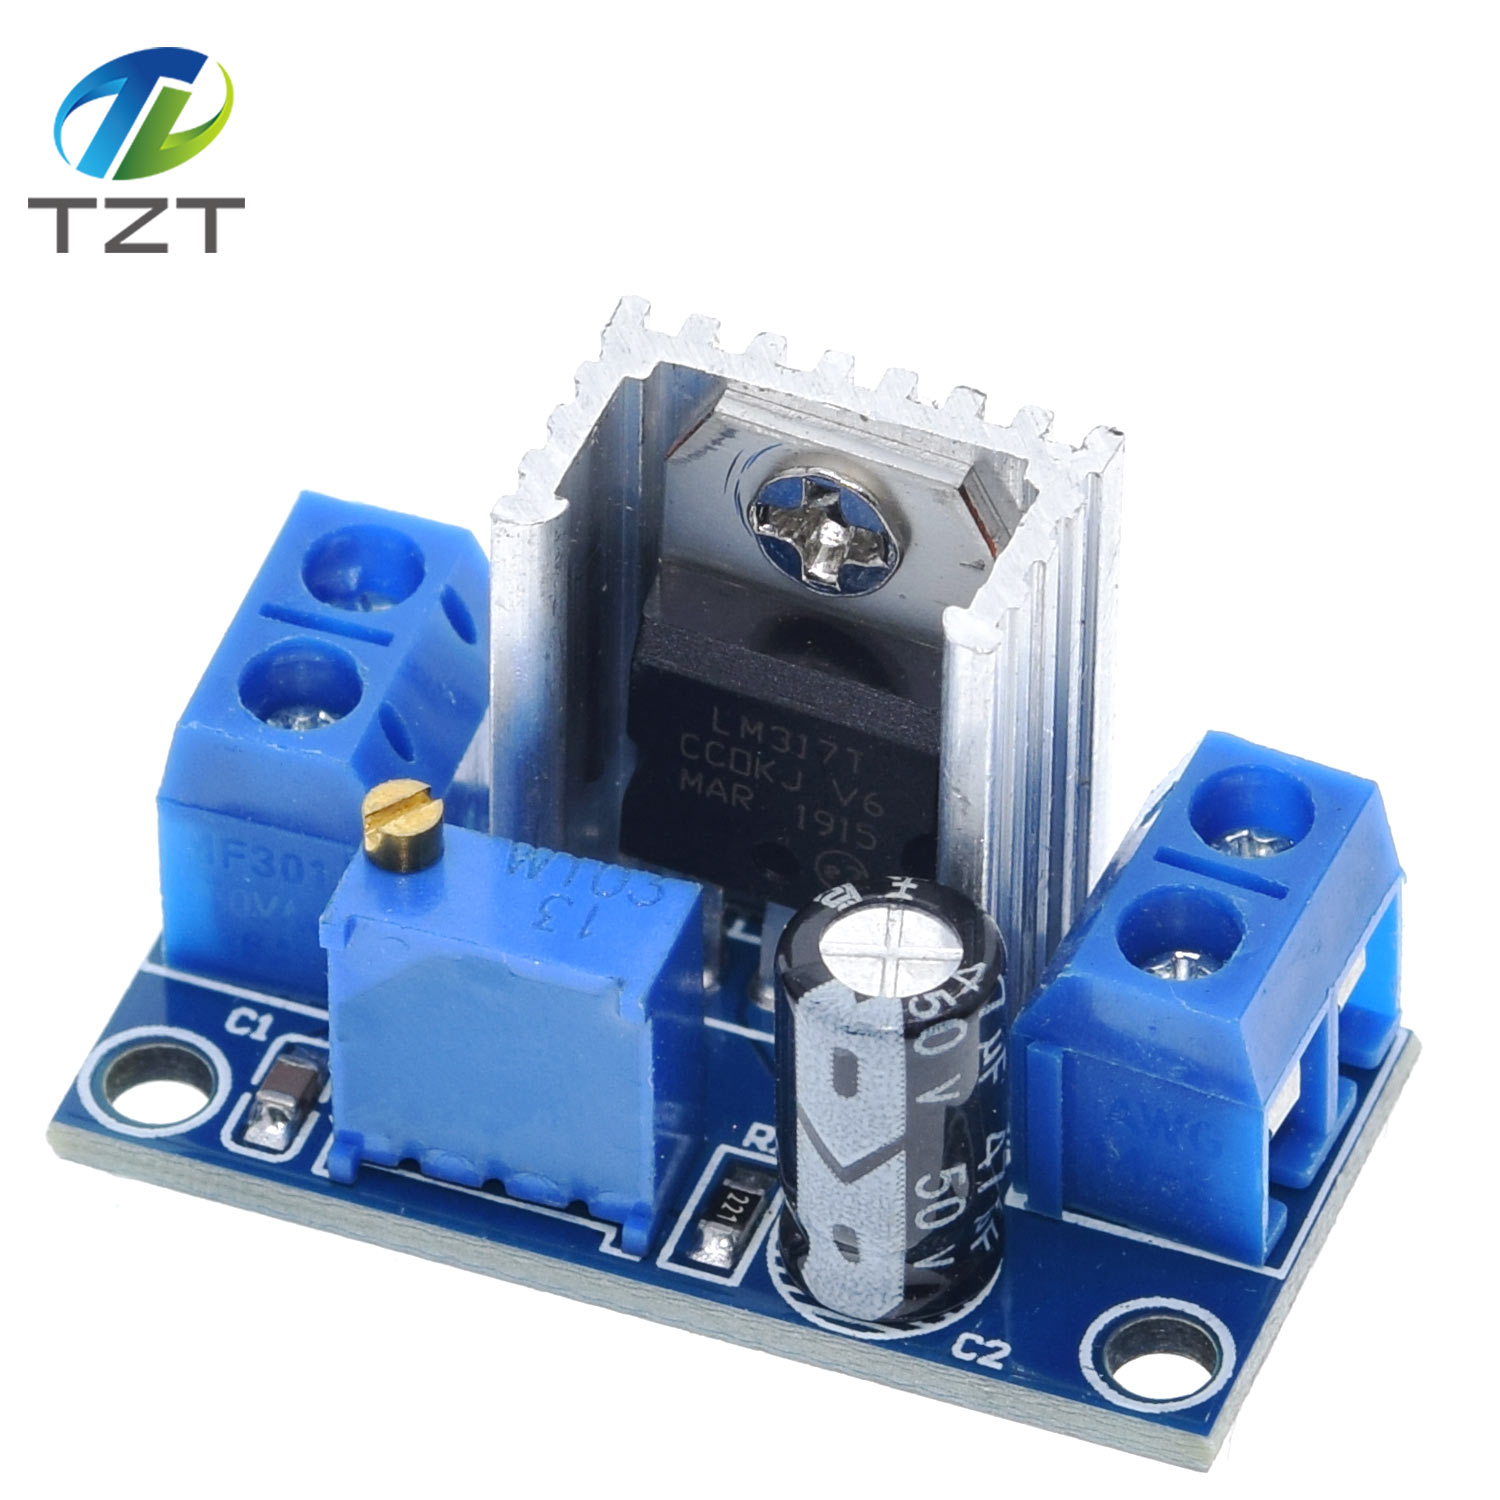 TZT LM317 DC-DC Converter Buck Step Down Circuit Board Module Linear Regulator LM317 Adjustable Voltage Regulator Power Supply